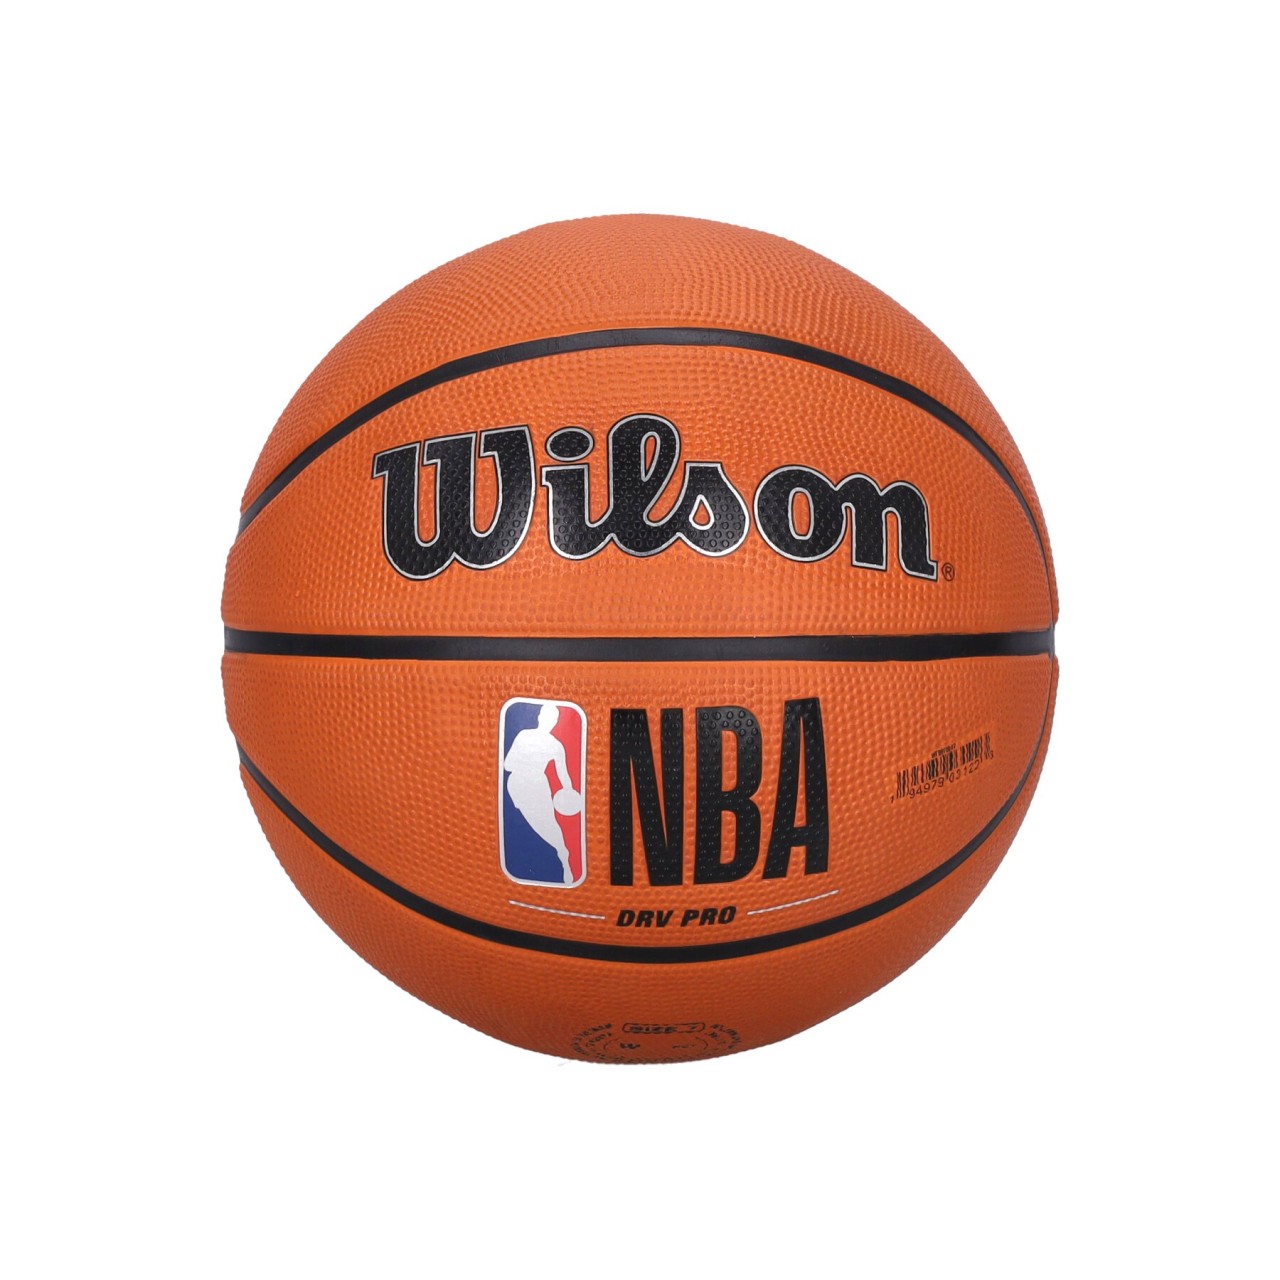 WILSON TEAM NBA DRV PRO BASKETBALL SIZE 7 WTB9100XB07